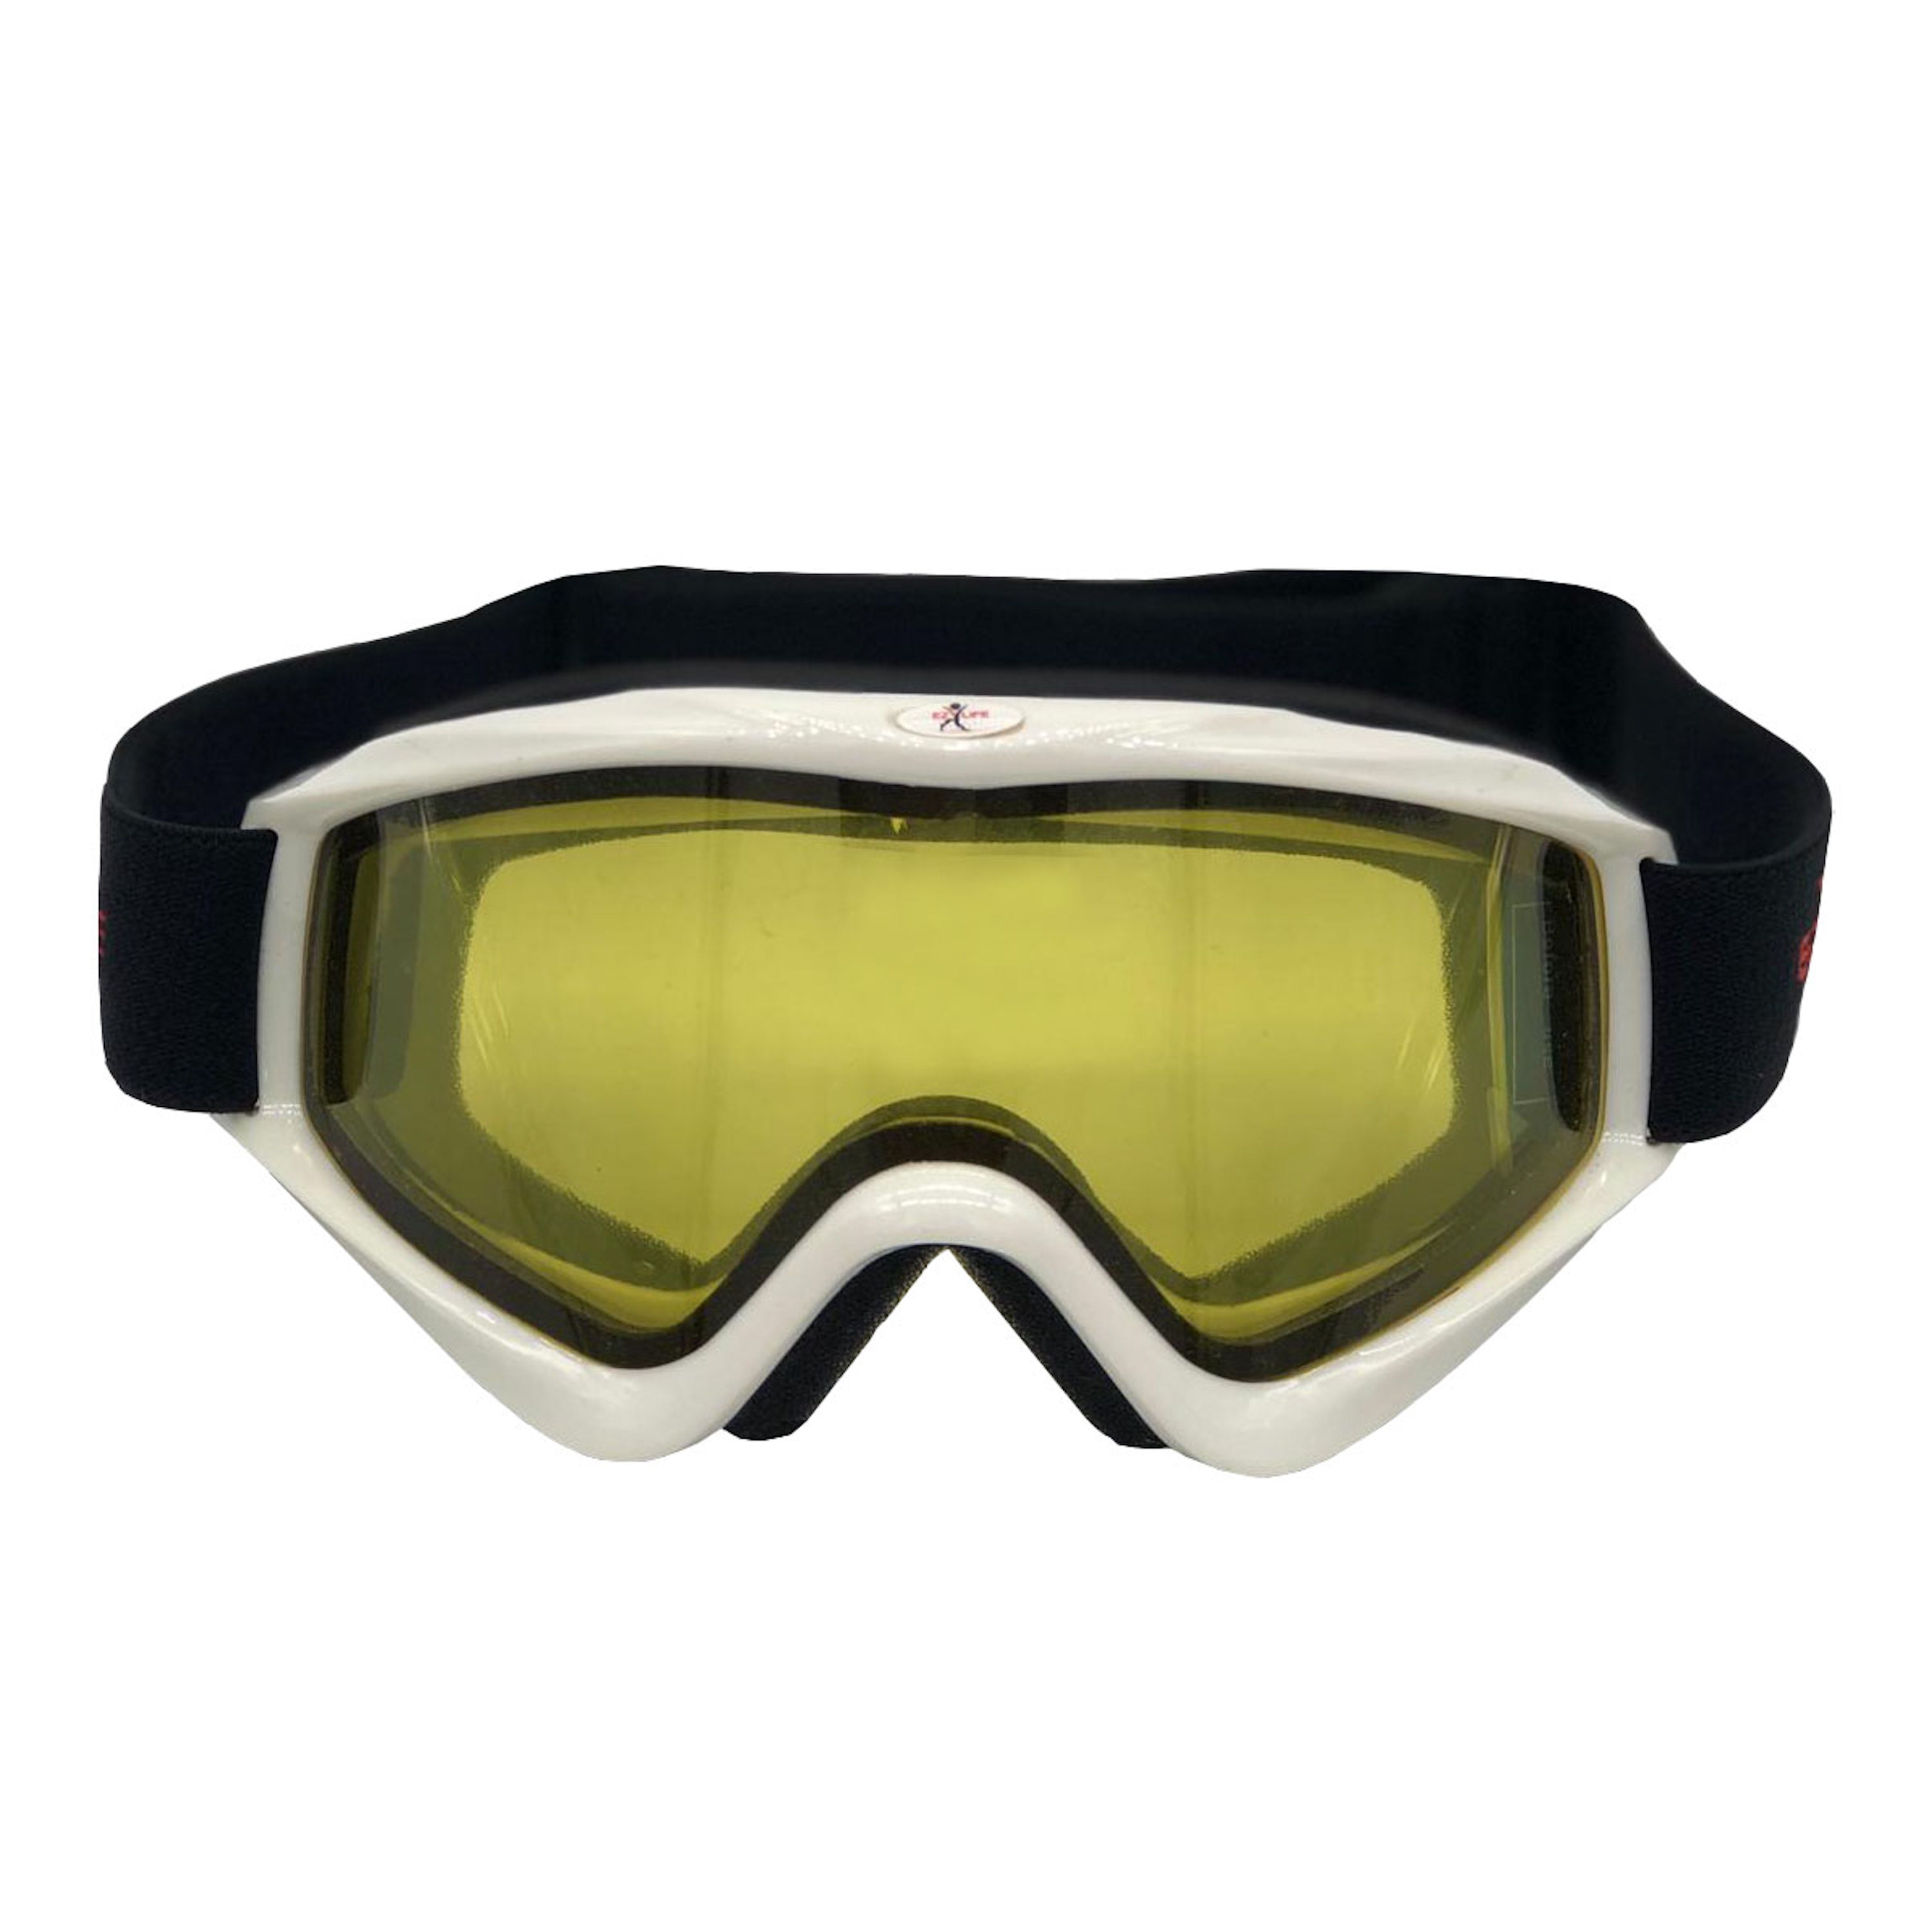 Yellow ski goggles